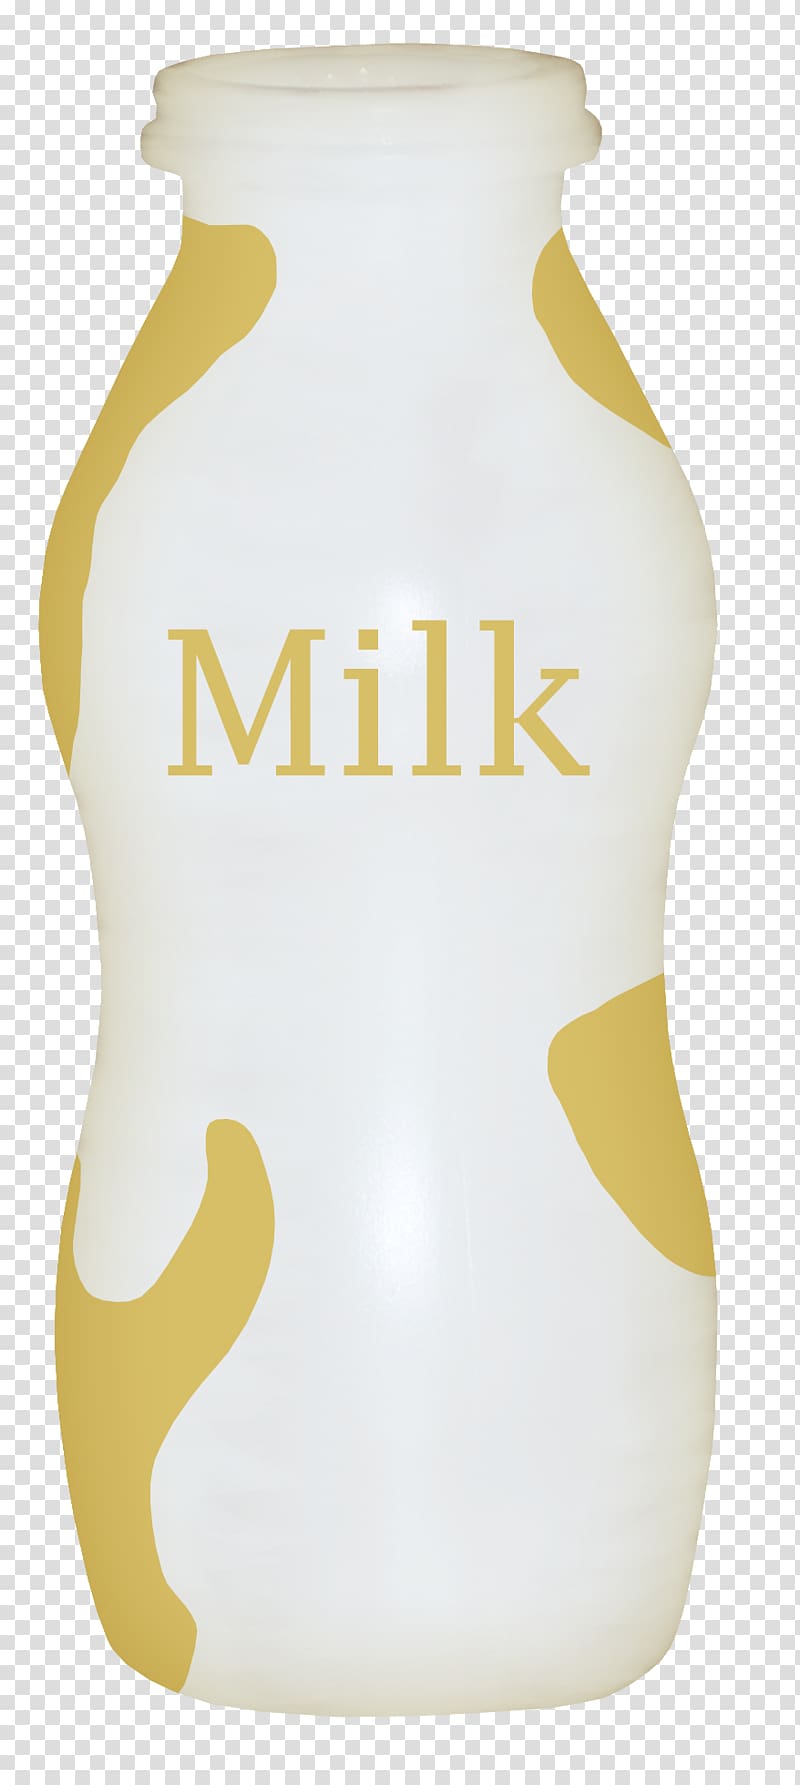 Cows milk Milk bottle, Milk Cup gold transparent background PNG clipart